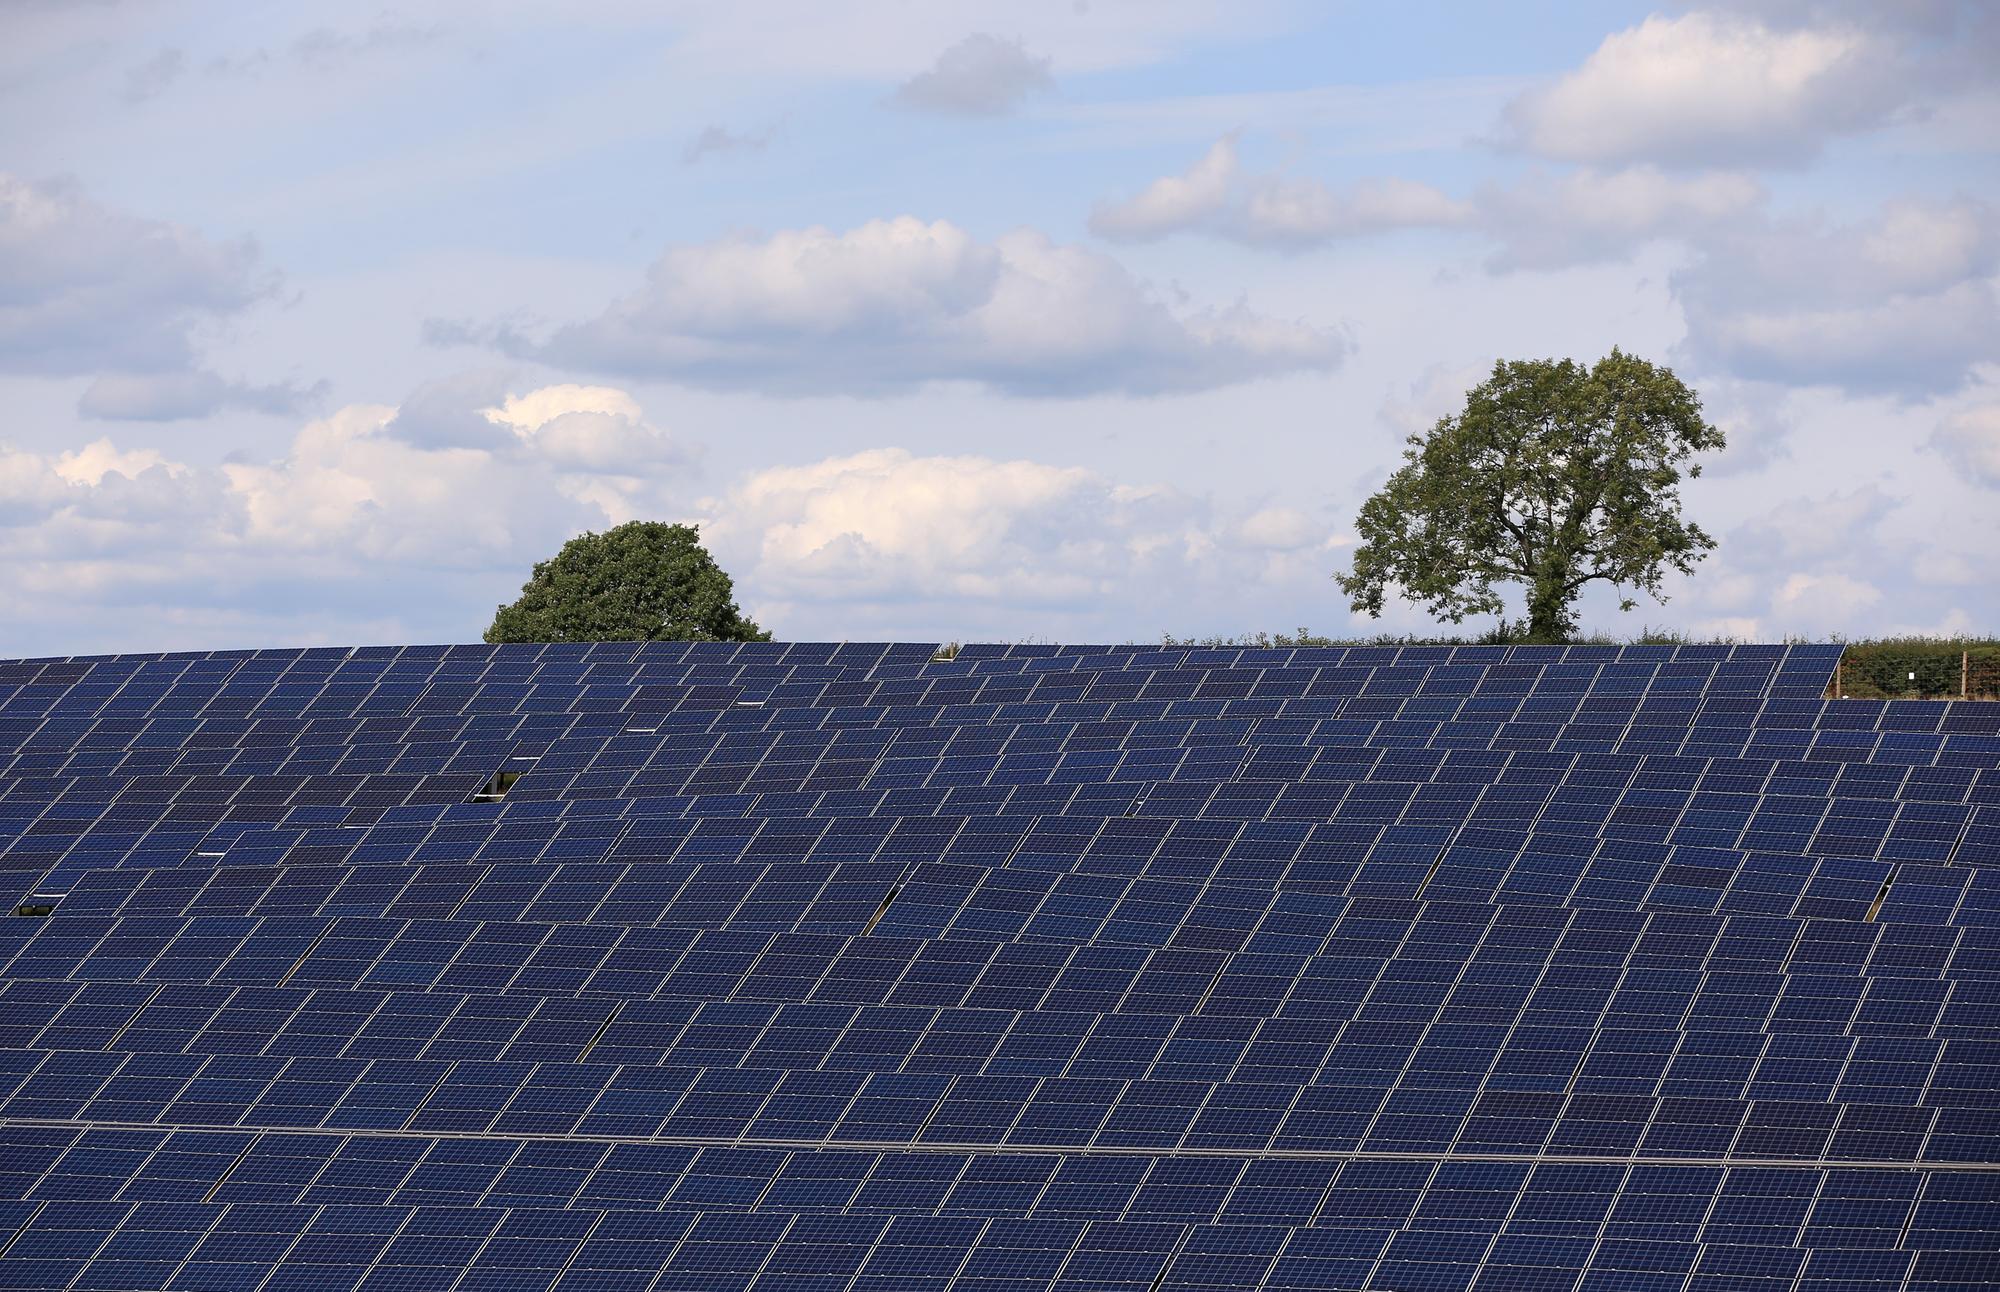 portsmouth.co.uk - Simon Carter - Demand for solar panels soars - highest monthly figure since 2015 recorded